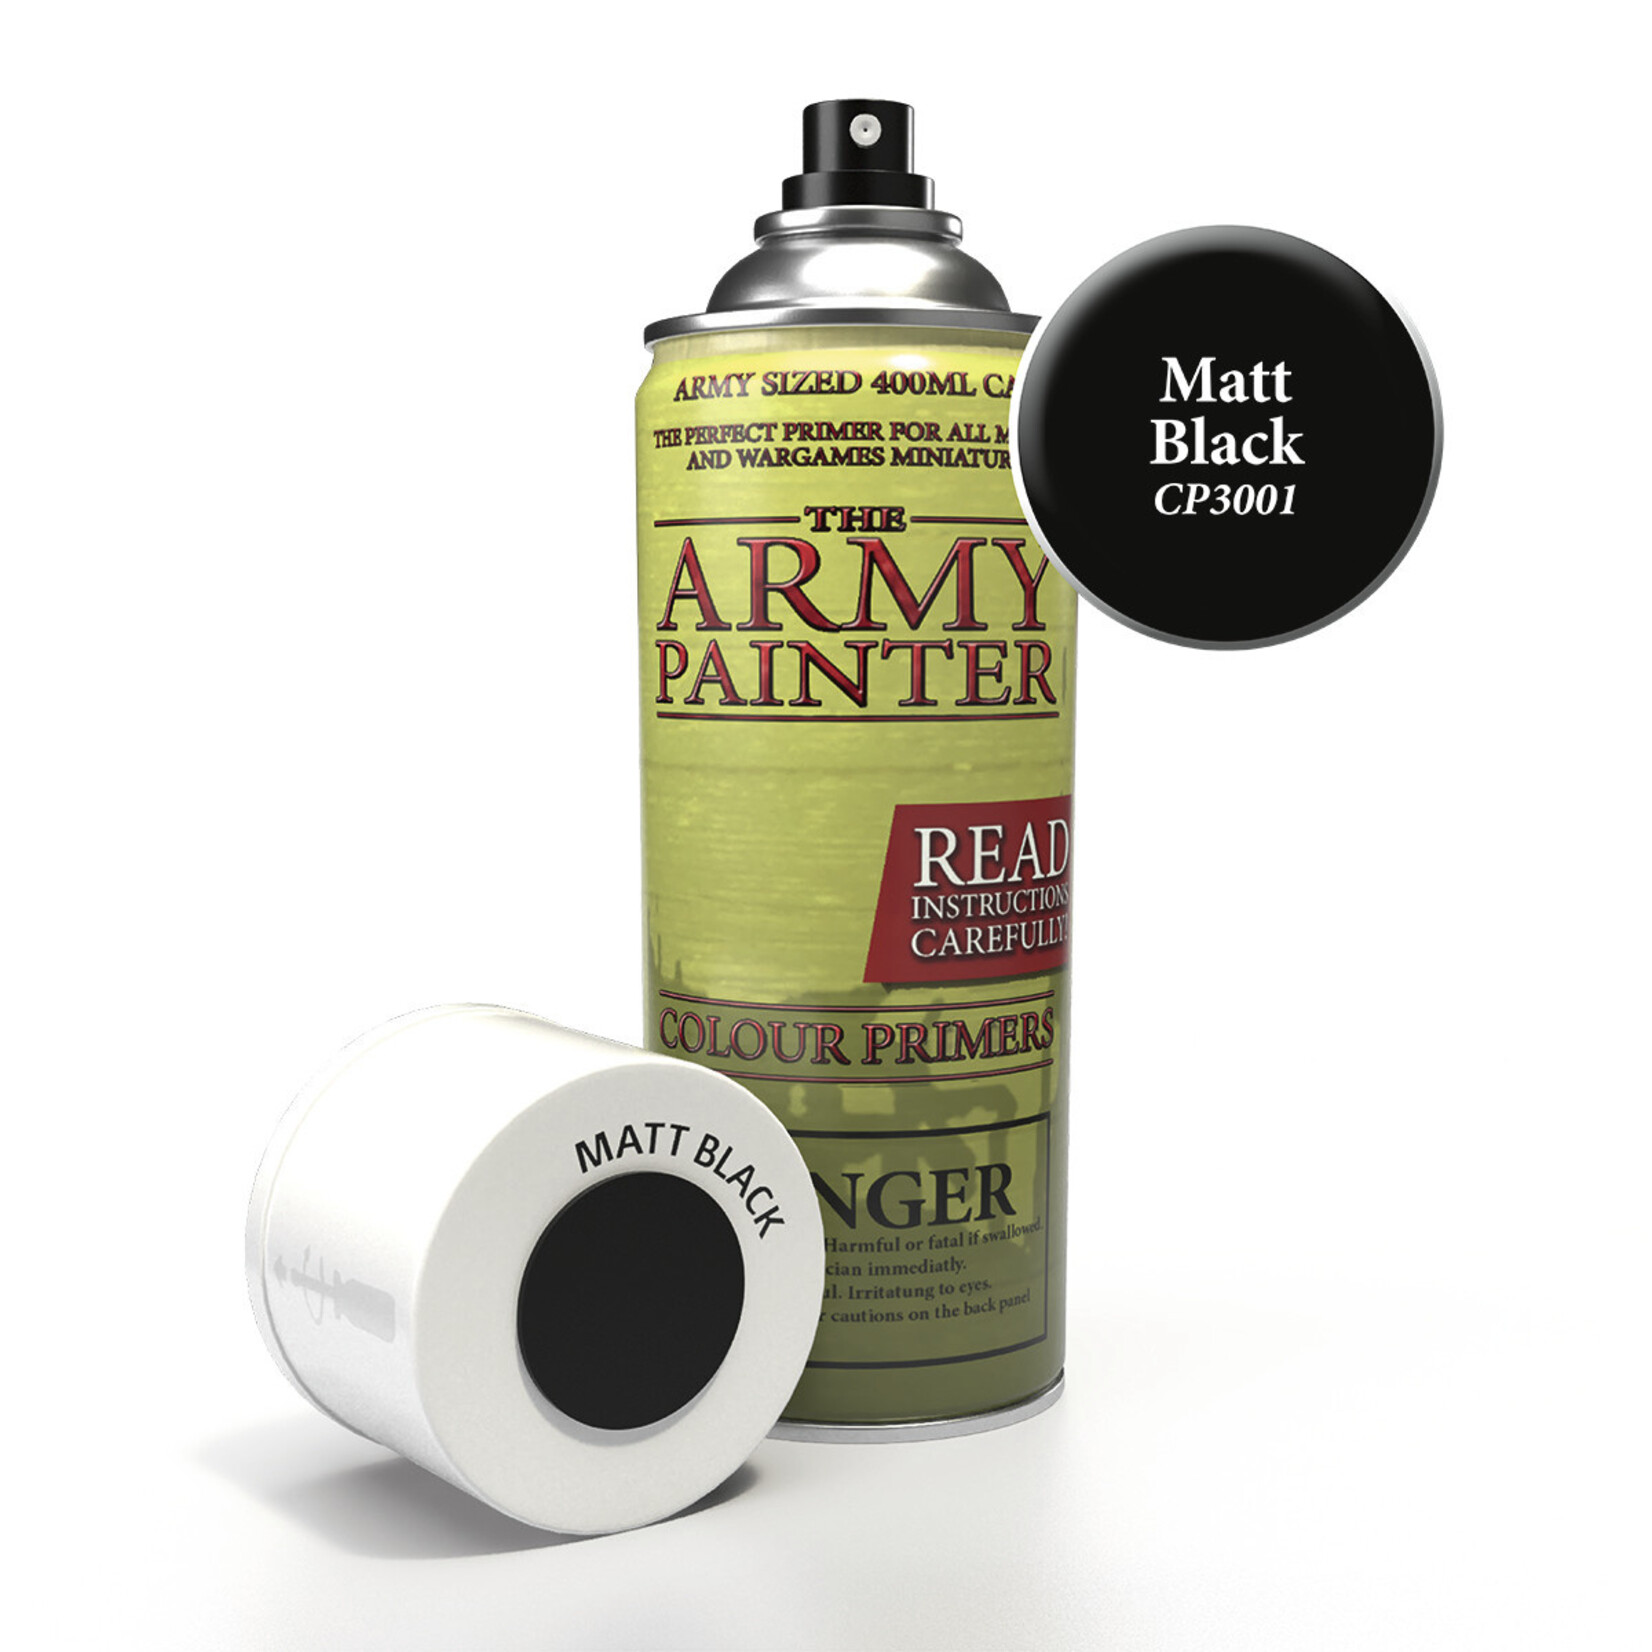 The Army Painter Base Primer: Matt Black